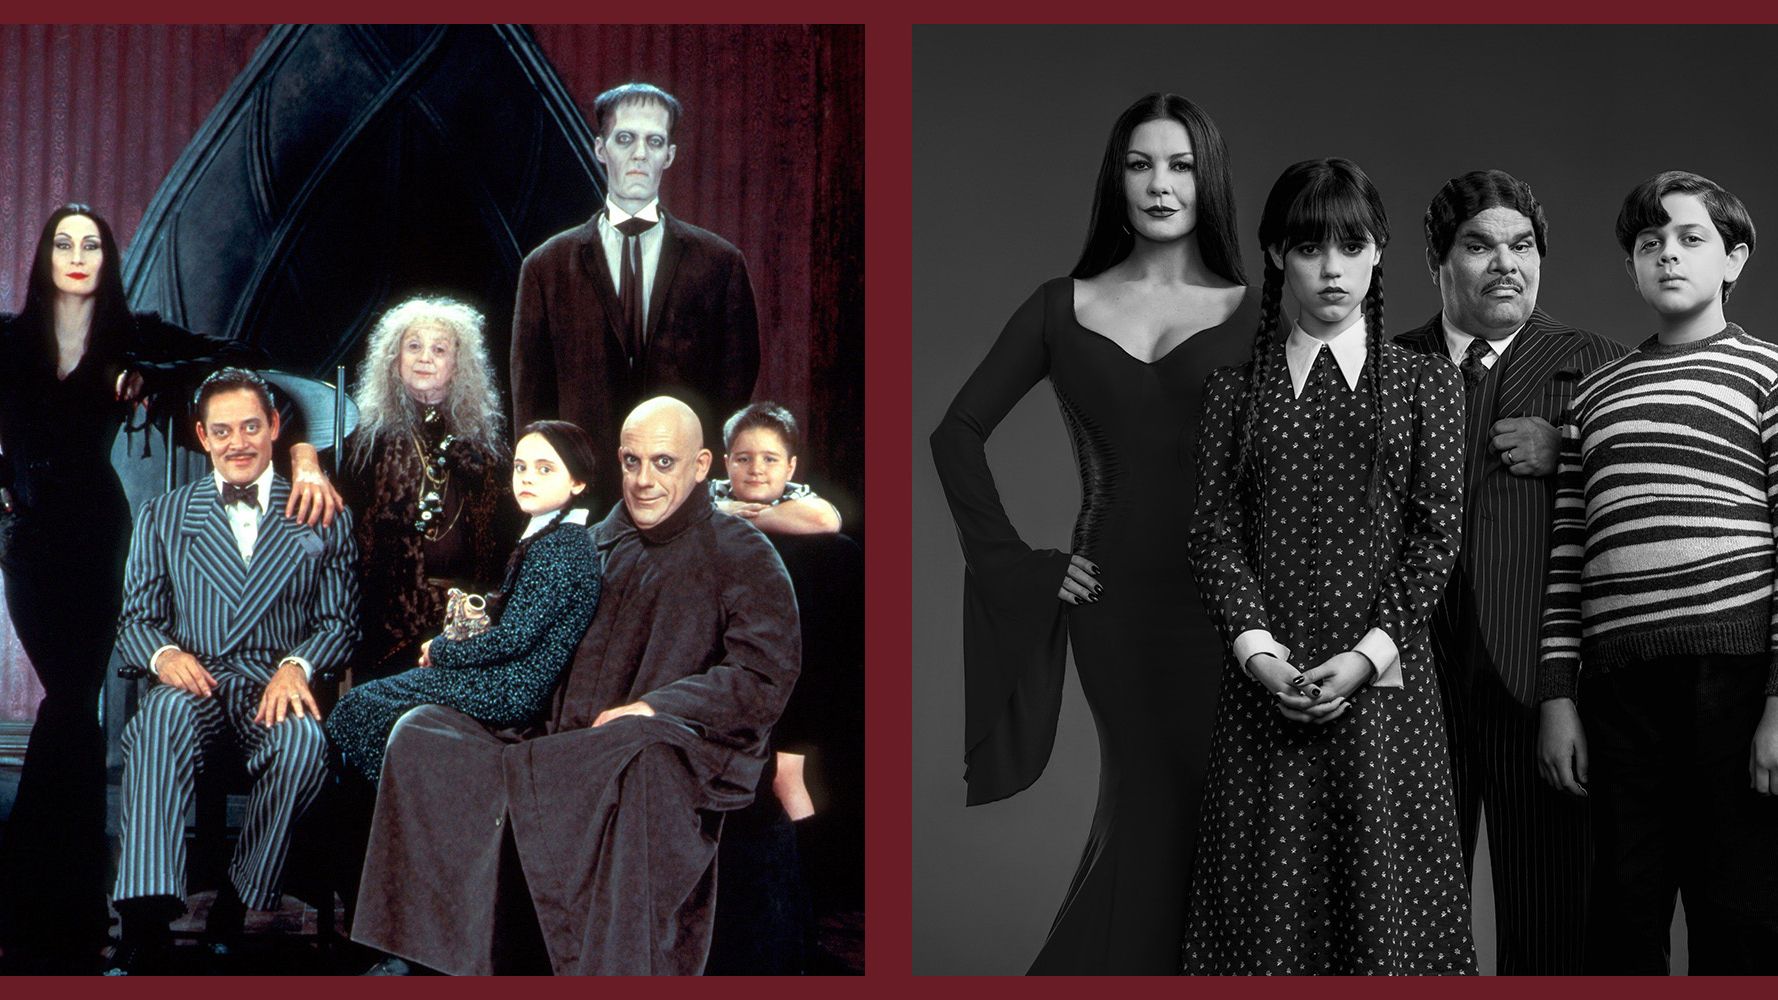 The Addams Family (1991 film) - Wikipedia